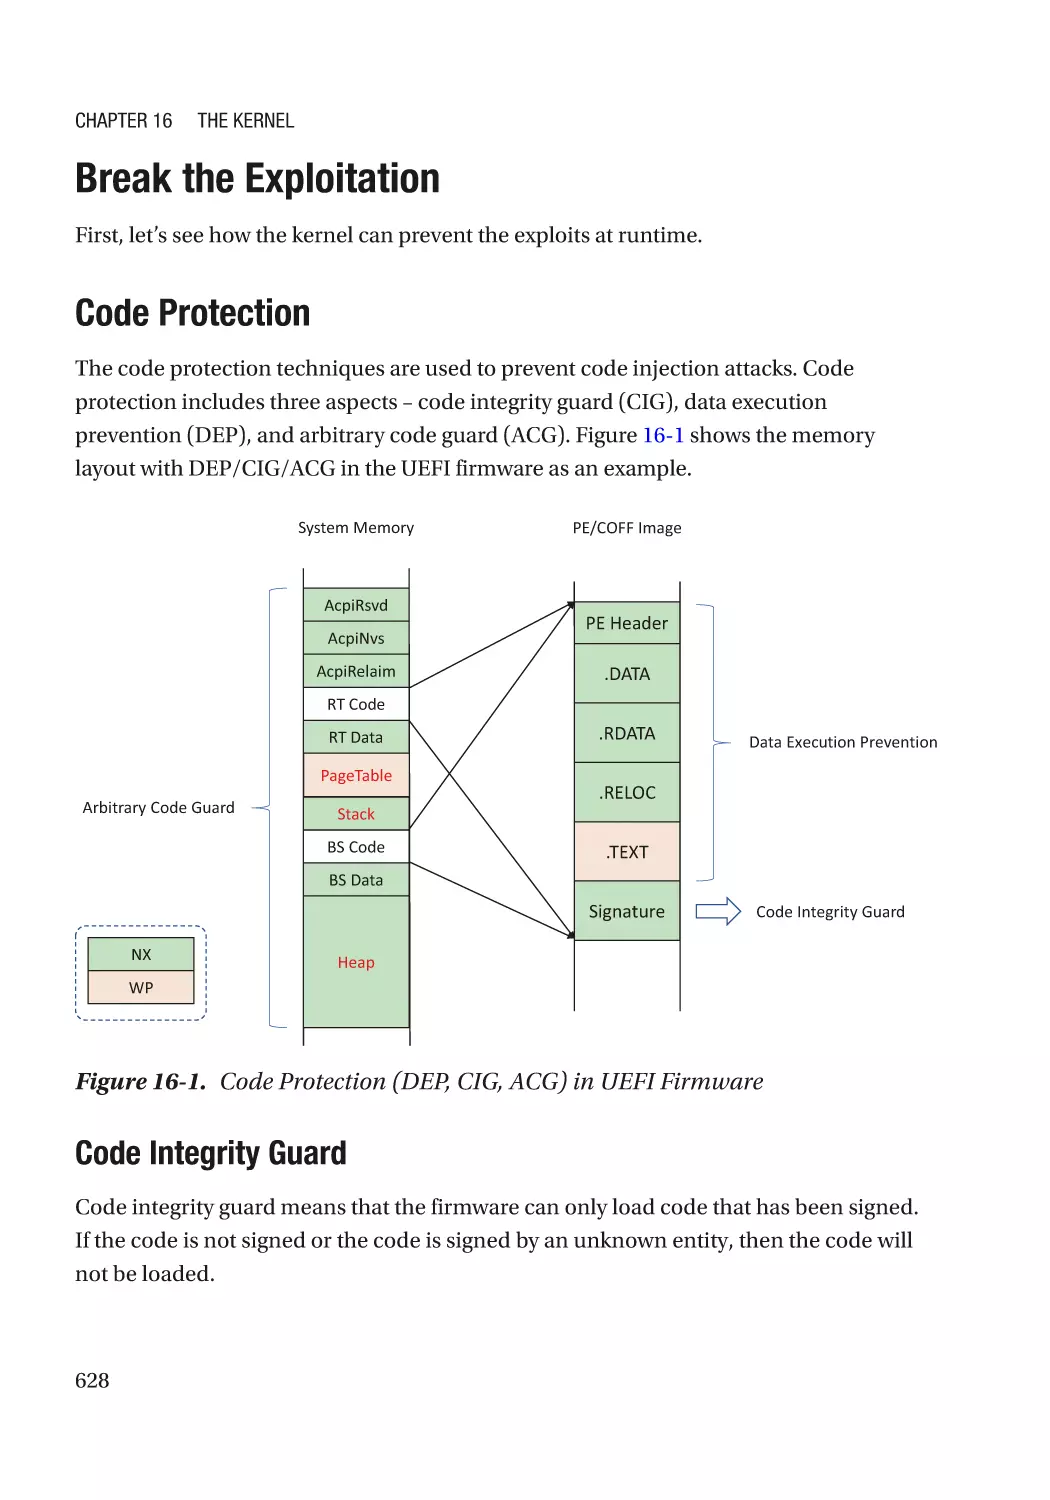 Break the Exploitation
Code Protection
Code Integrity Guard